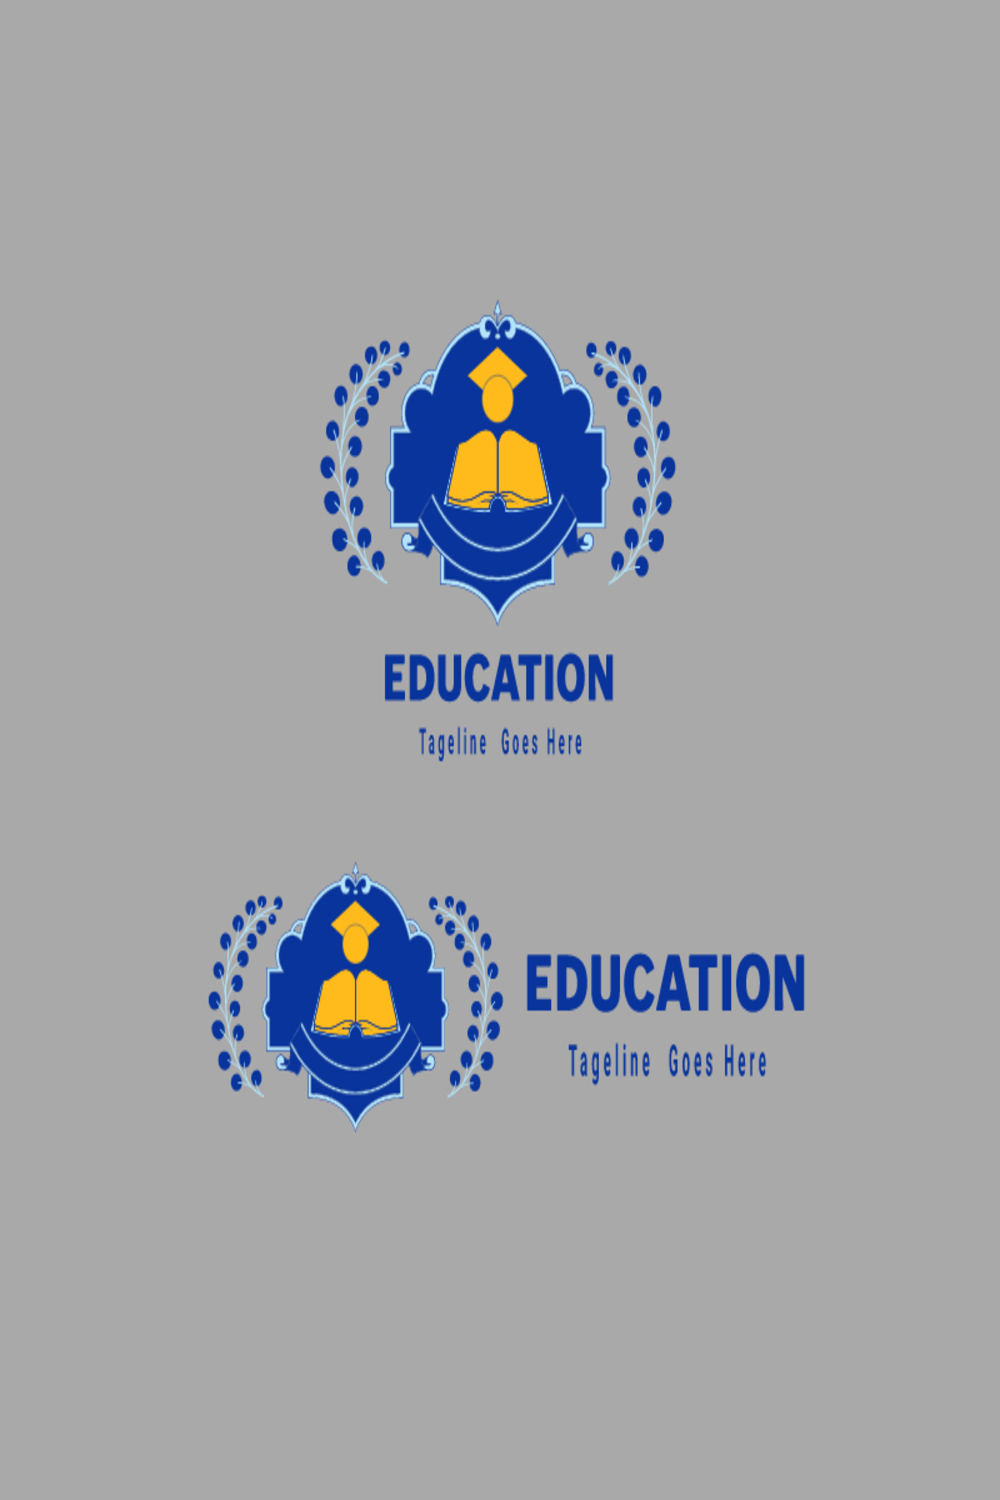 Education Logo Design pinterest image.